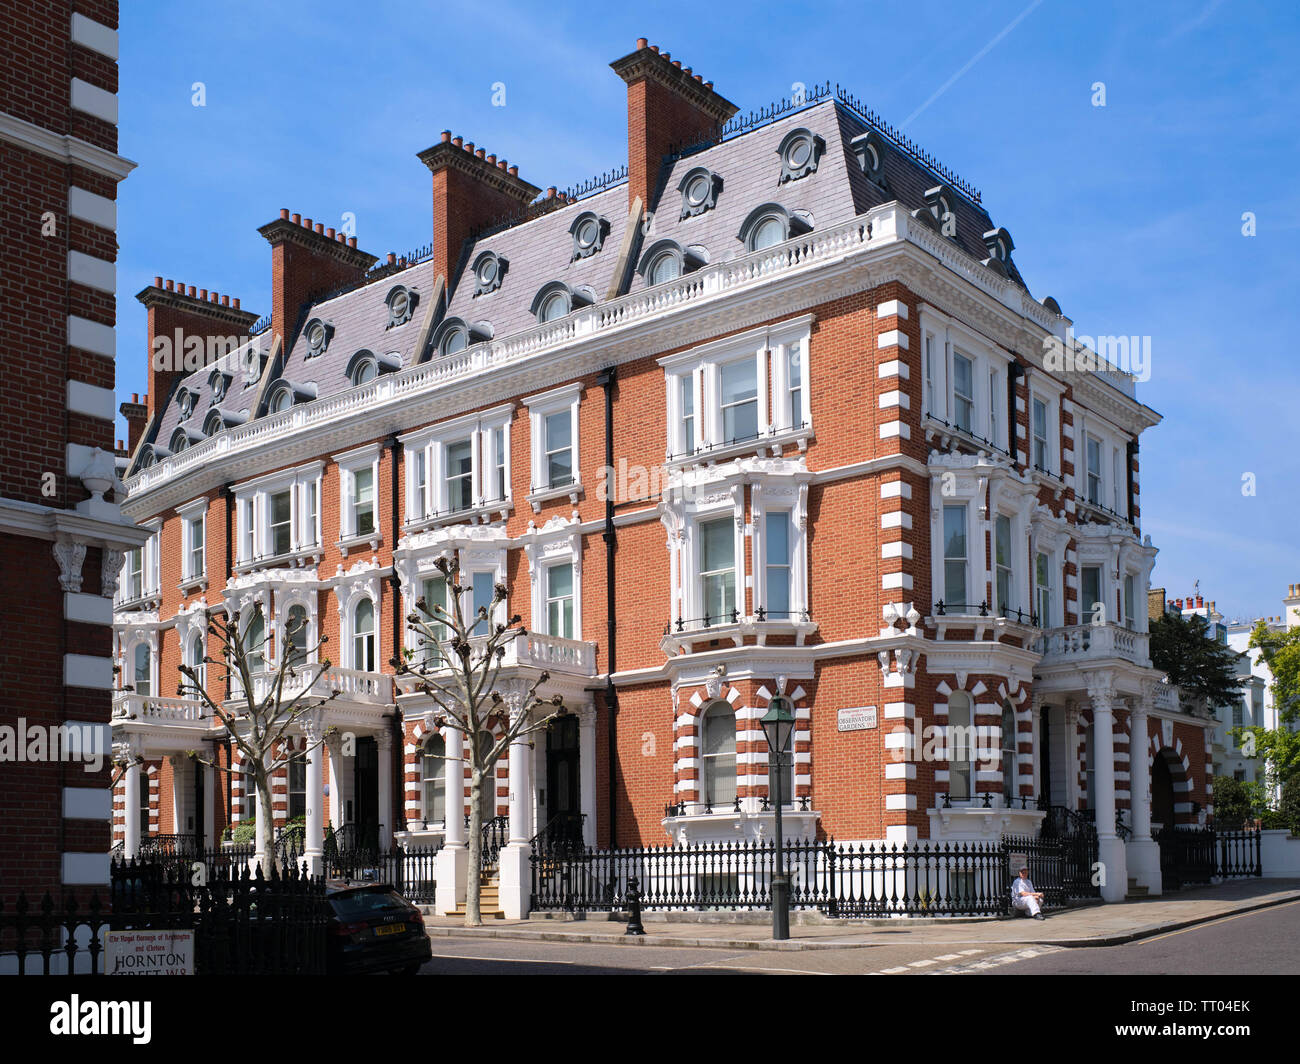 Examples of Georgian architecture in Kensington, London, England, UK. Stock Photo